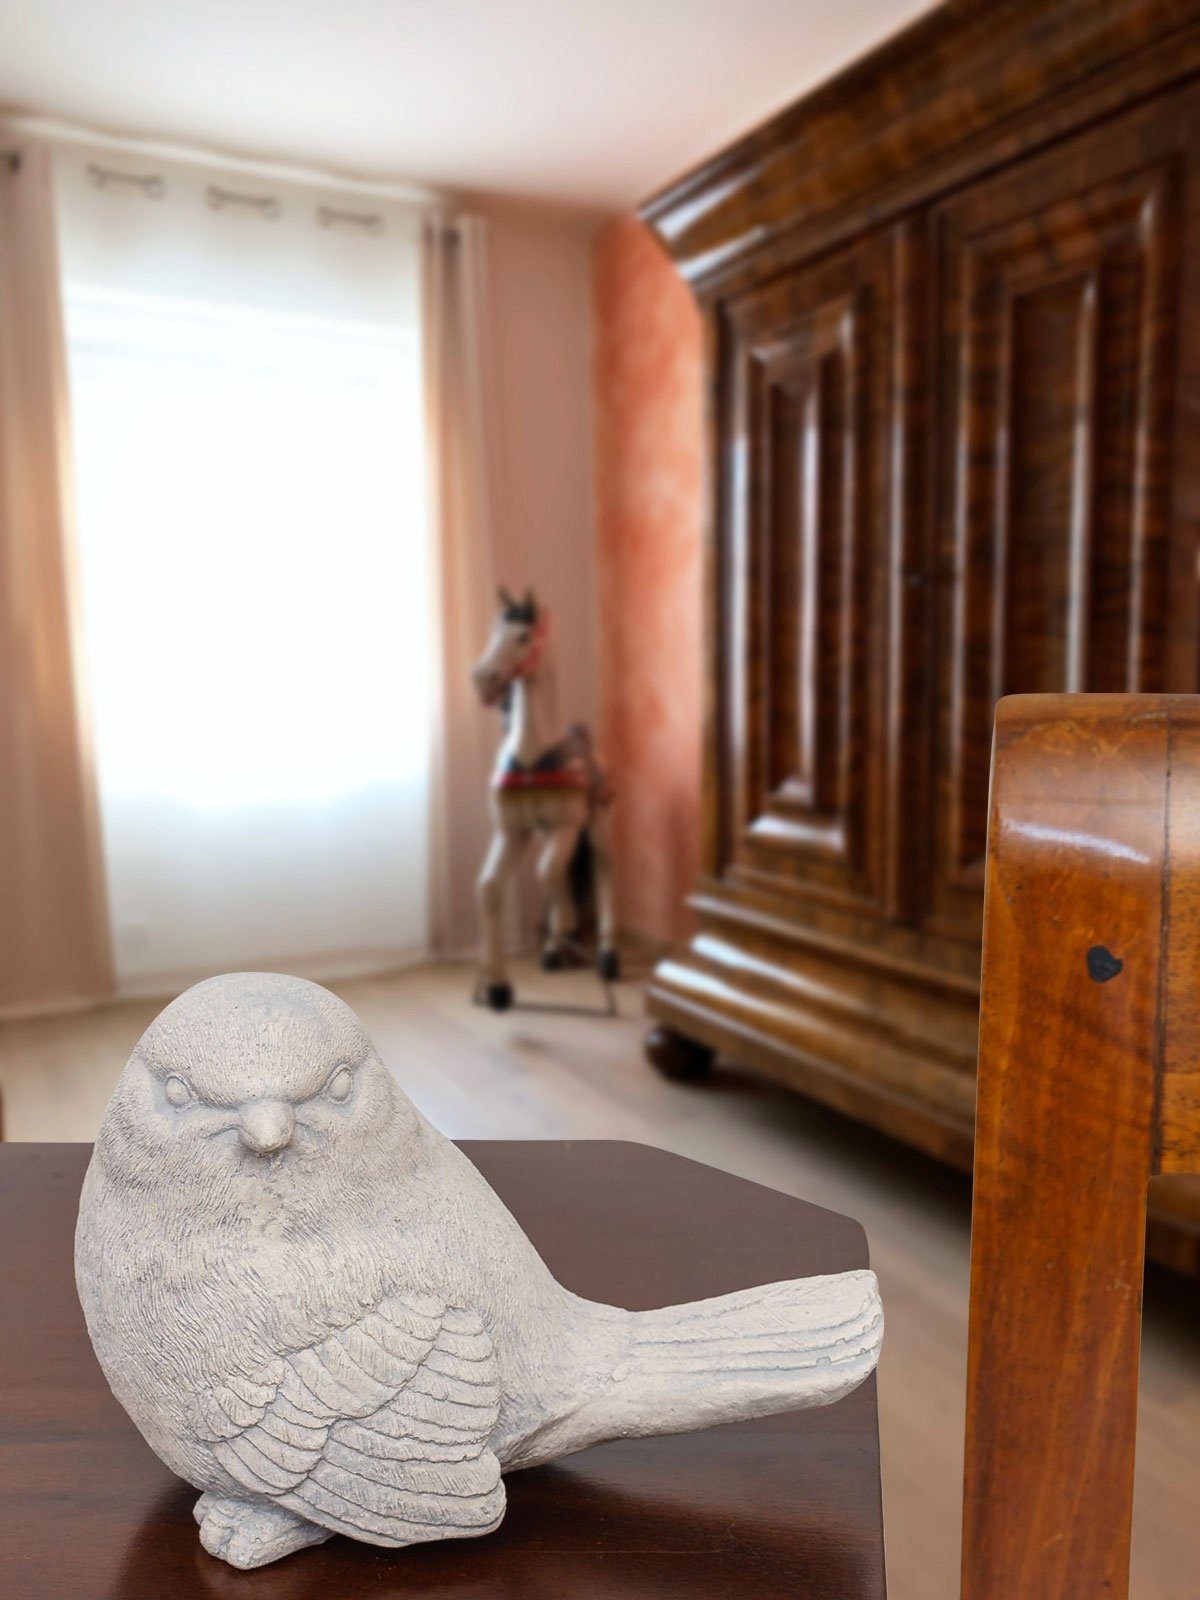 Aubaho Gartenfigur Skulptur Vogel Figur Statue Dekoration Kunststein massiver Antik-Stil